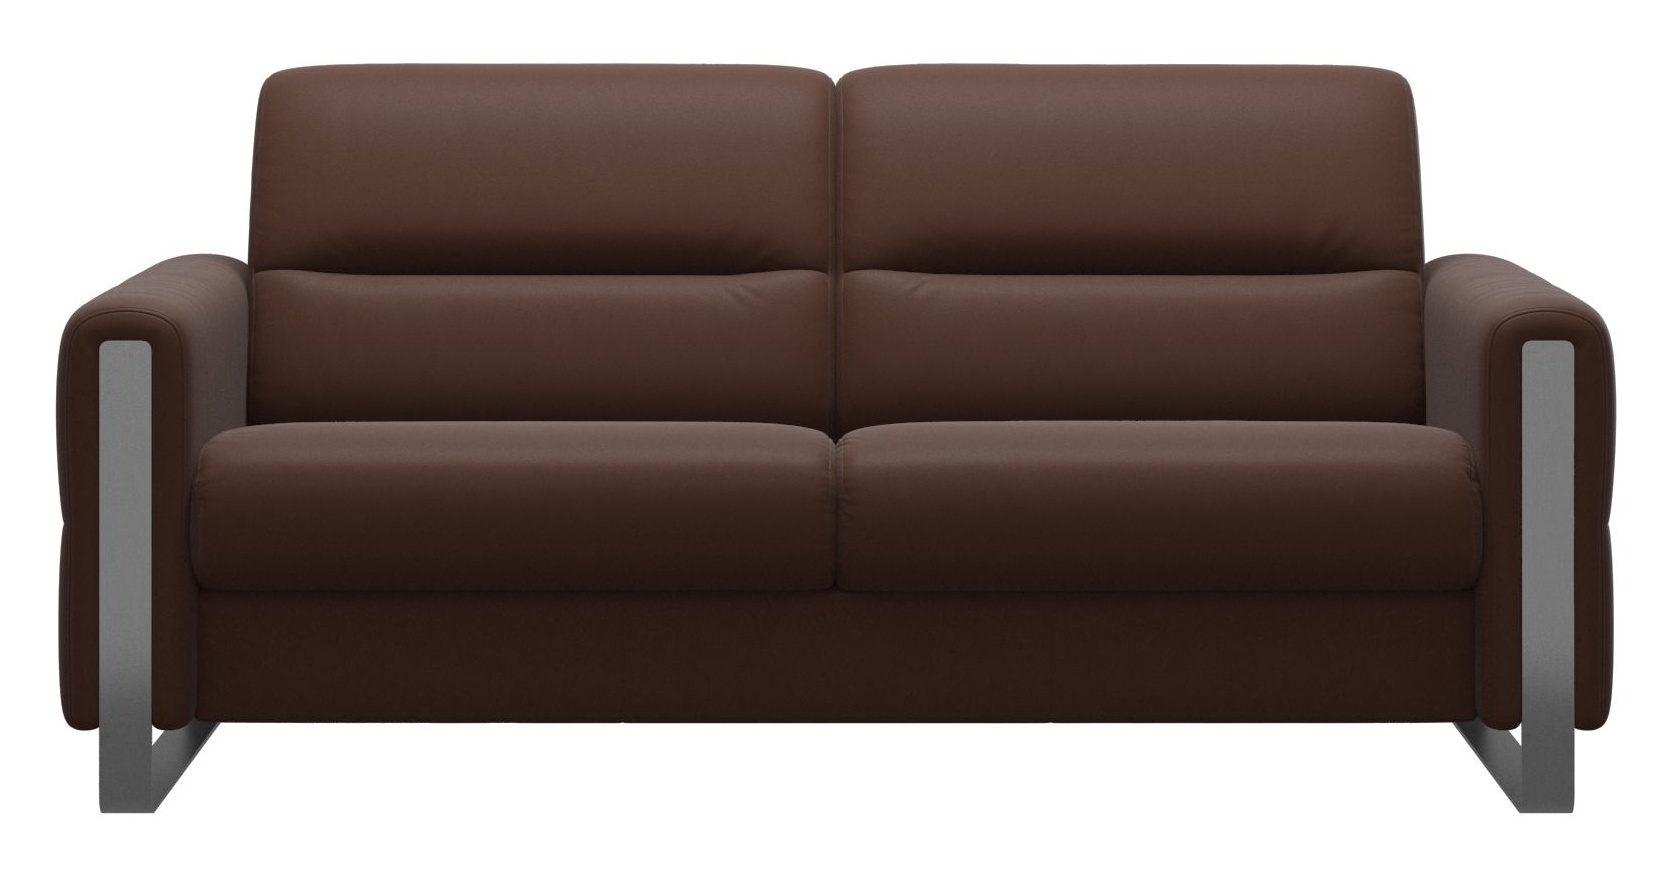 Stressless Fiona Steel 2.5 Seater Sofa